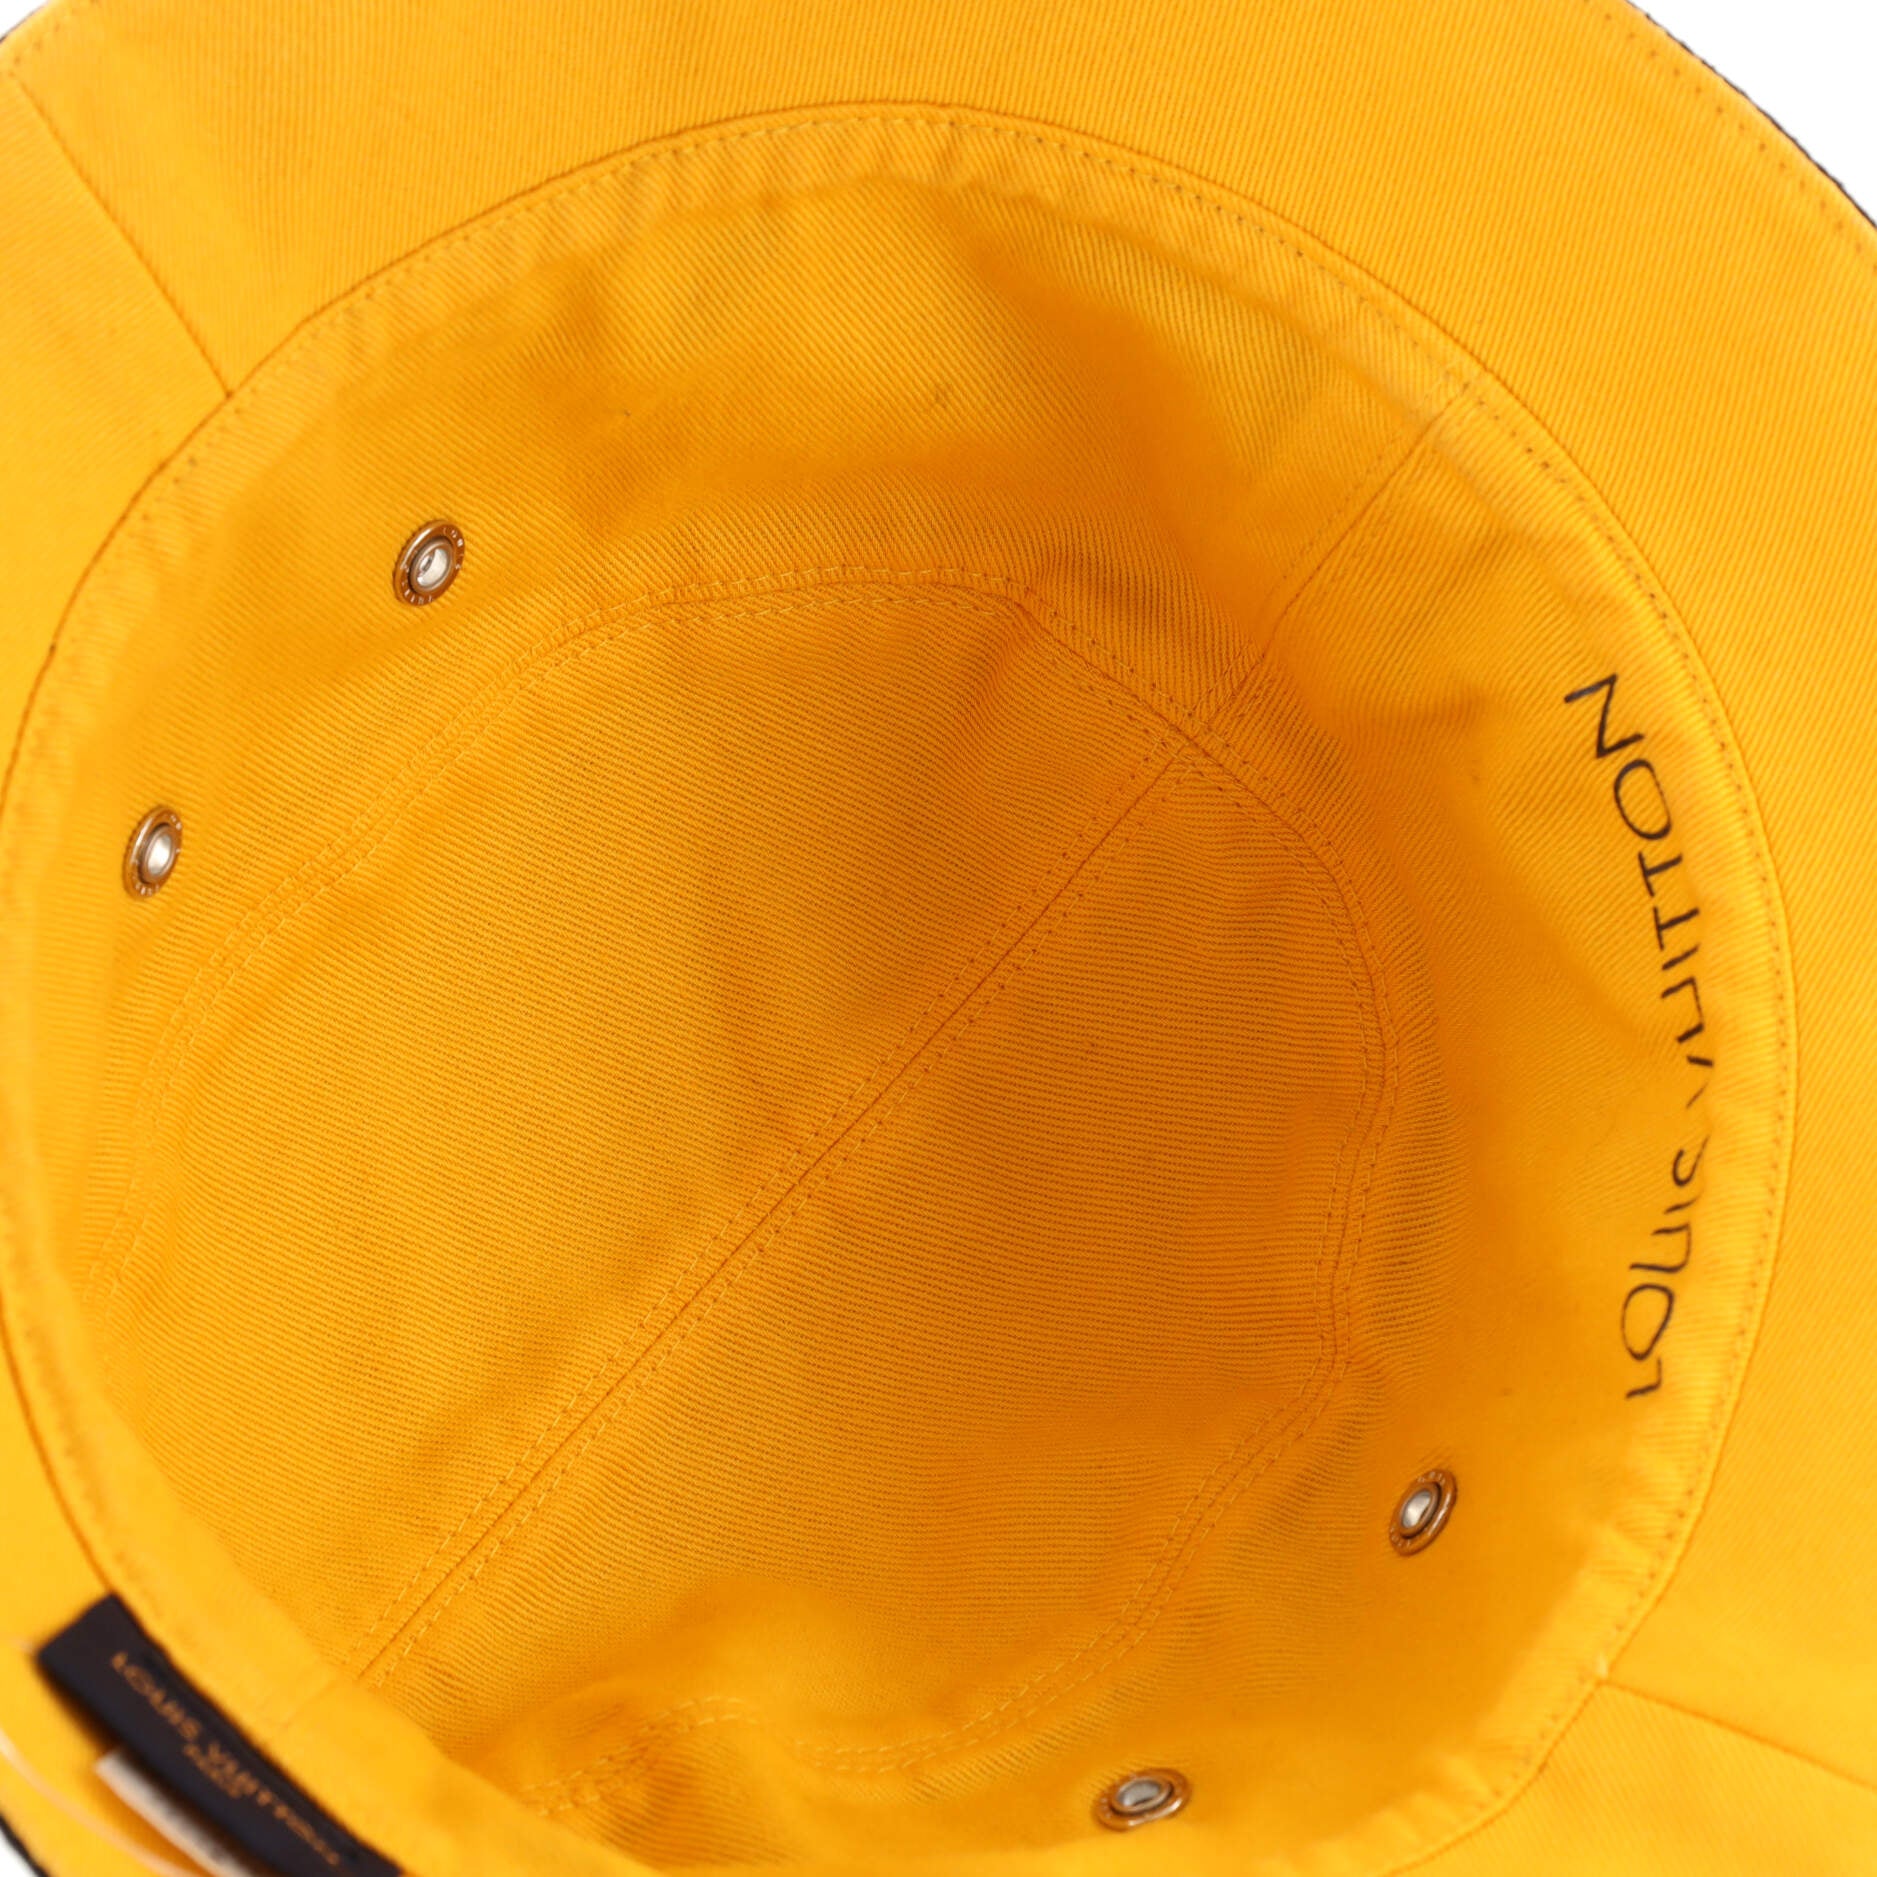 Louis Vuitton Reversible Bucket Hat Distorted Damier Cotton Black 2180224